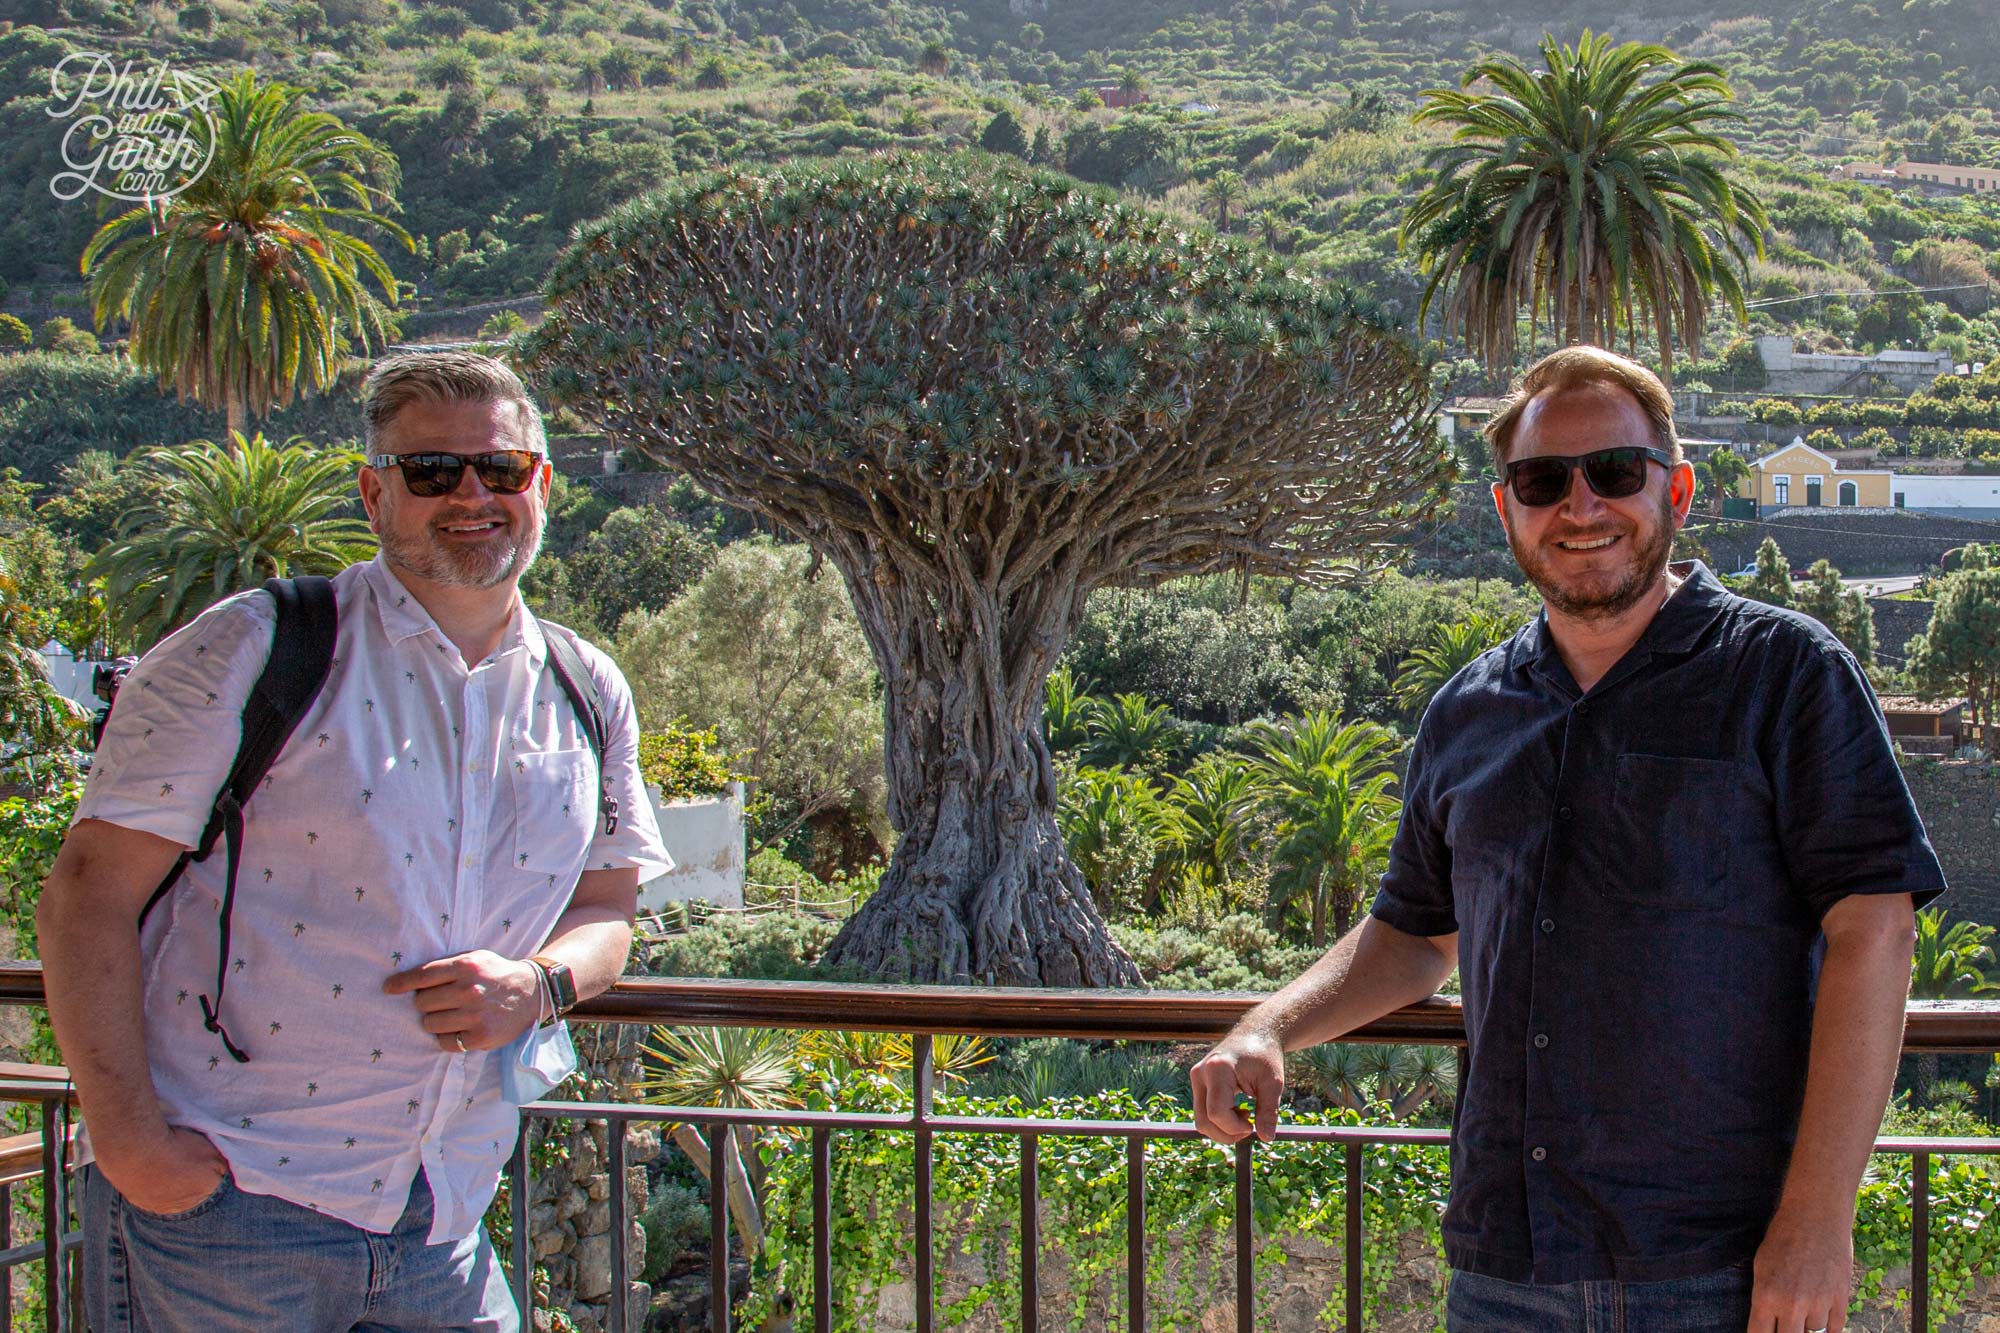 Phil and Garth next to the Millenary Dragon Tree in Icod de los Vinos